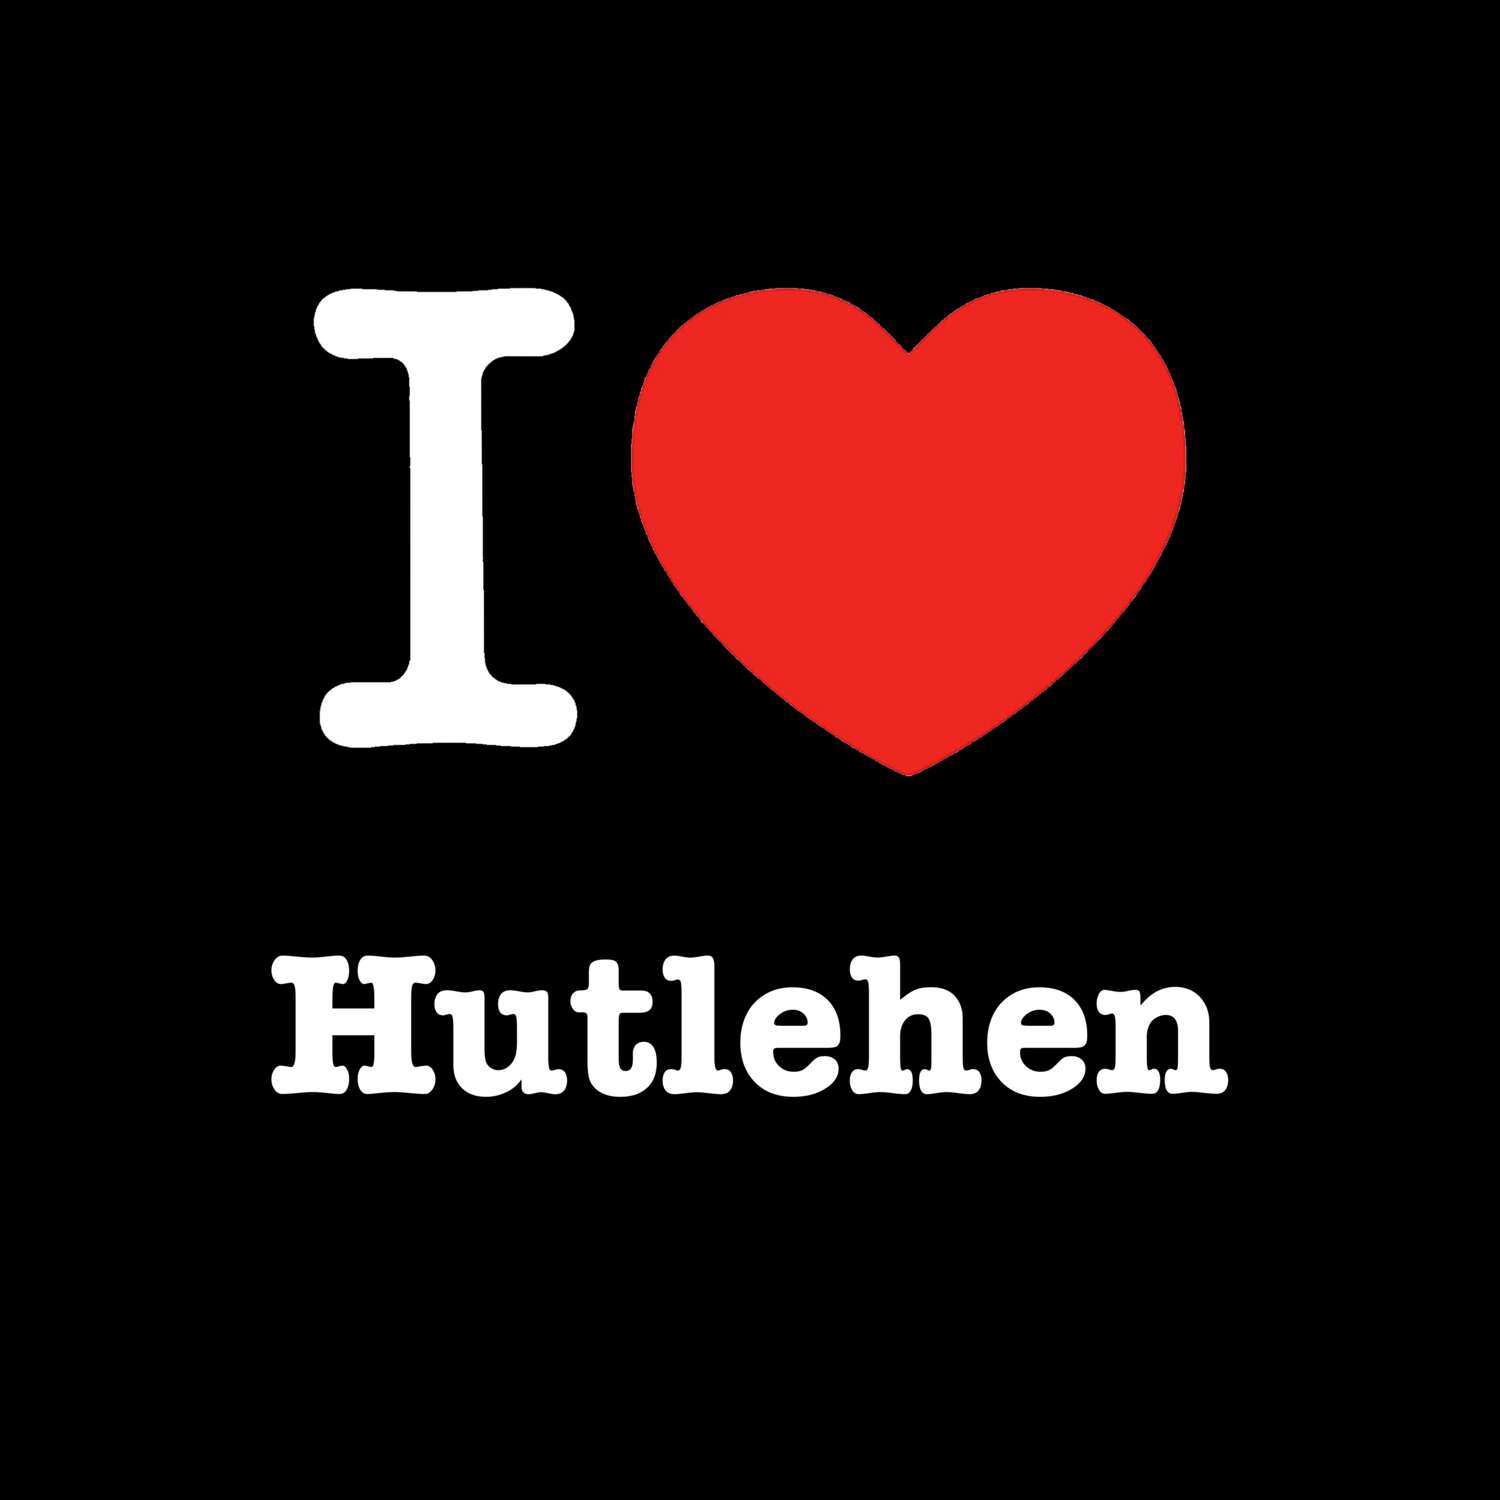 Hutlehen T-Shirt »I love«